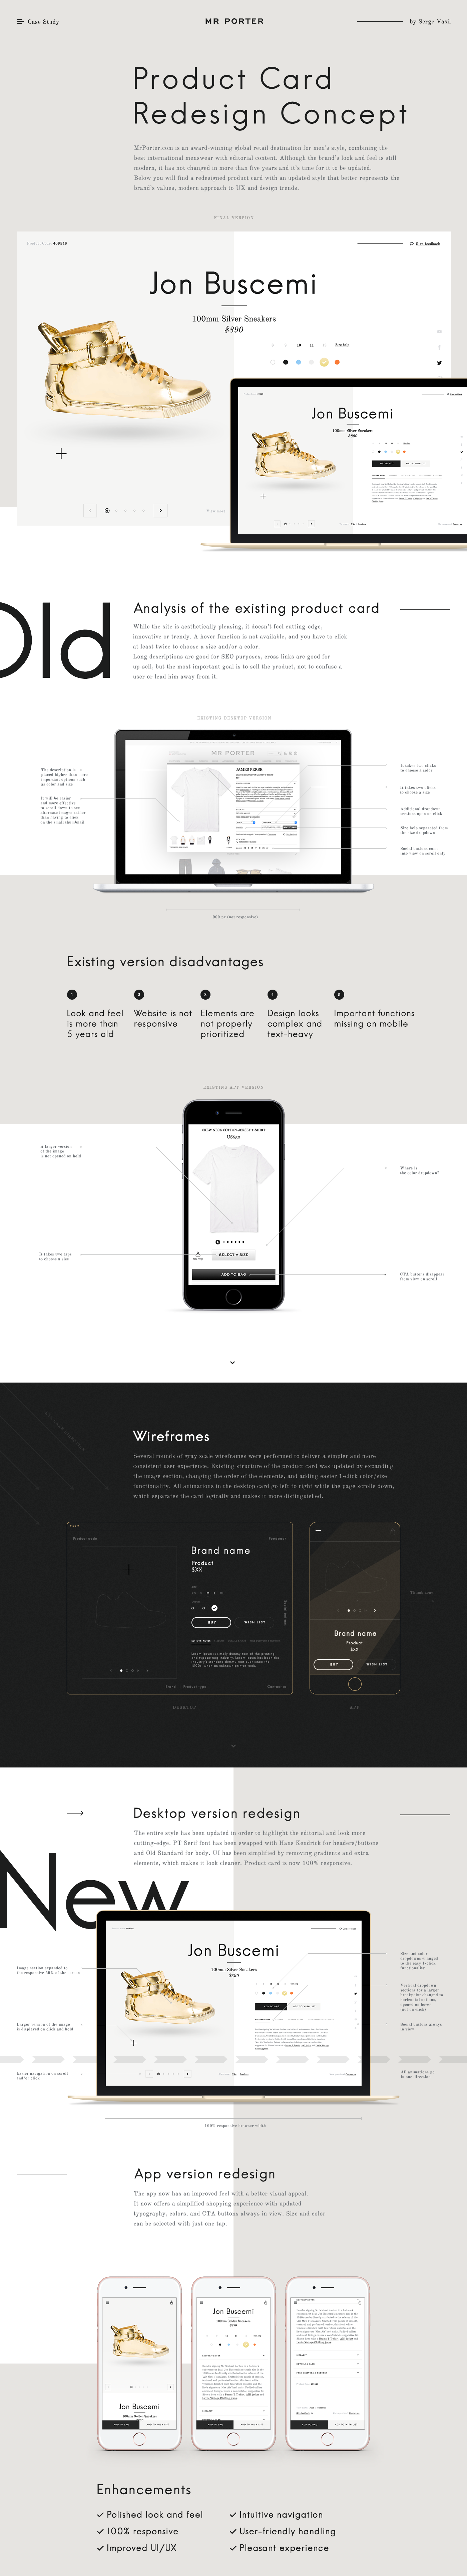 Mr Porter redesign product card Ecommerce case study app desktop mobile story behind before after